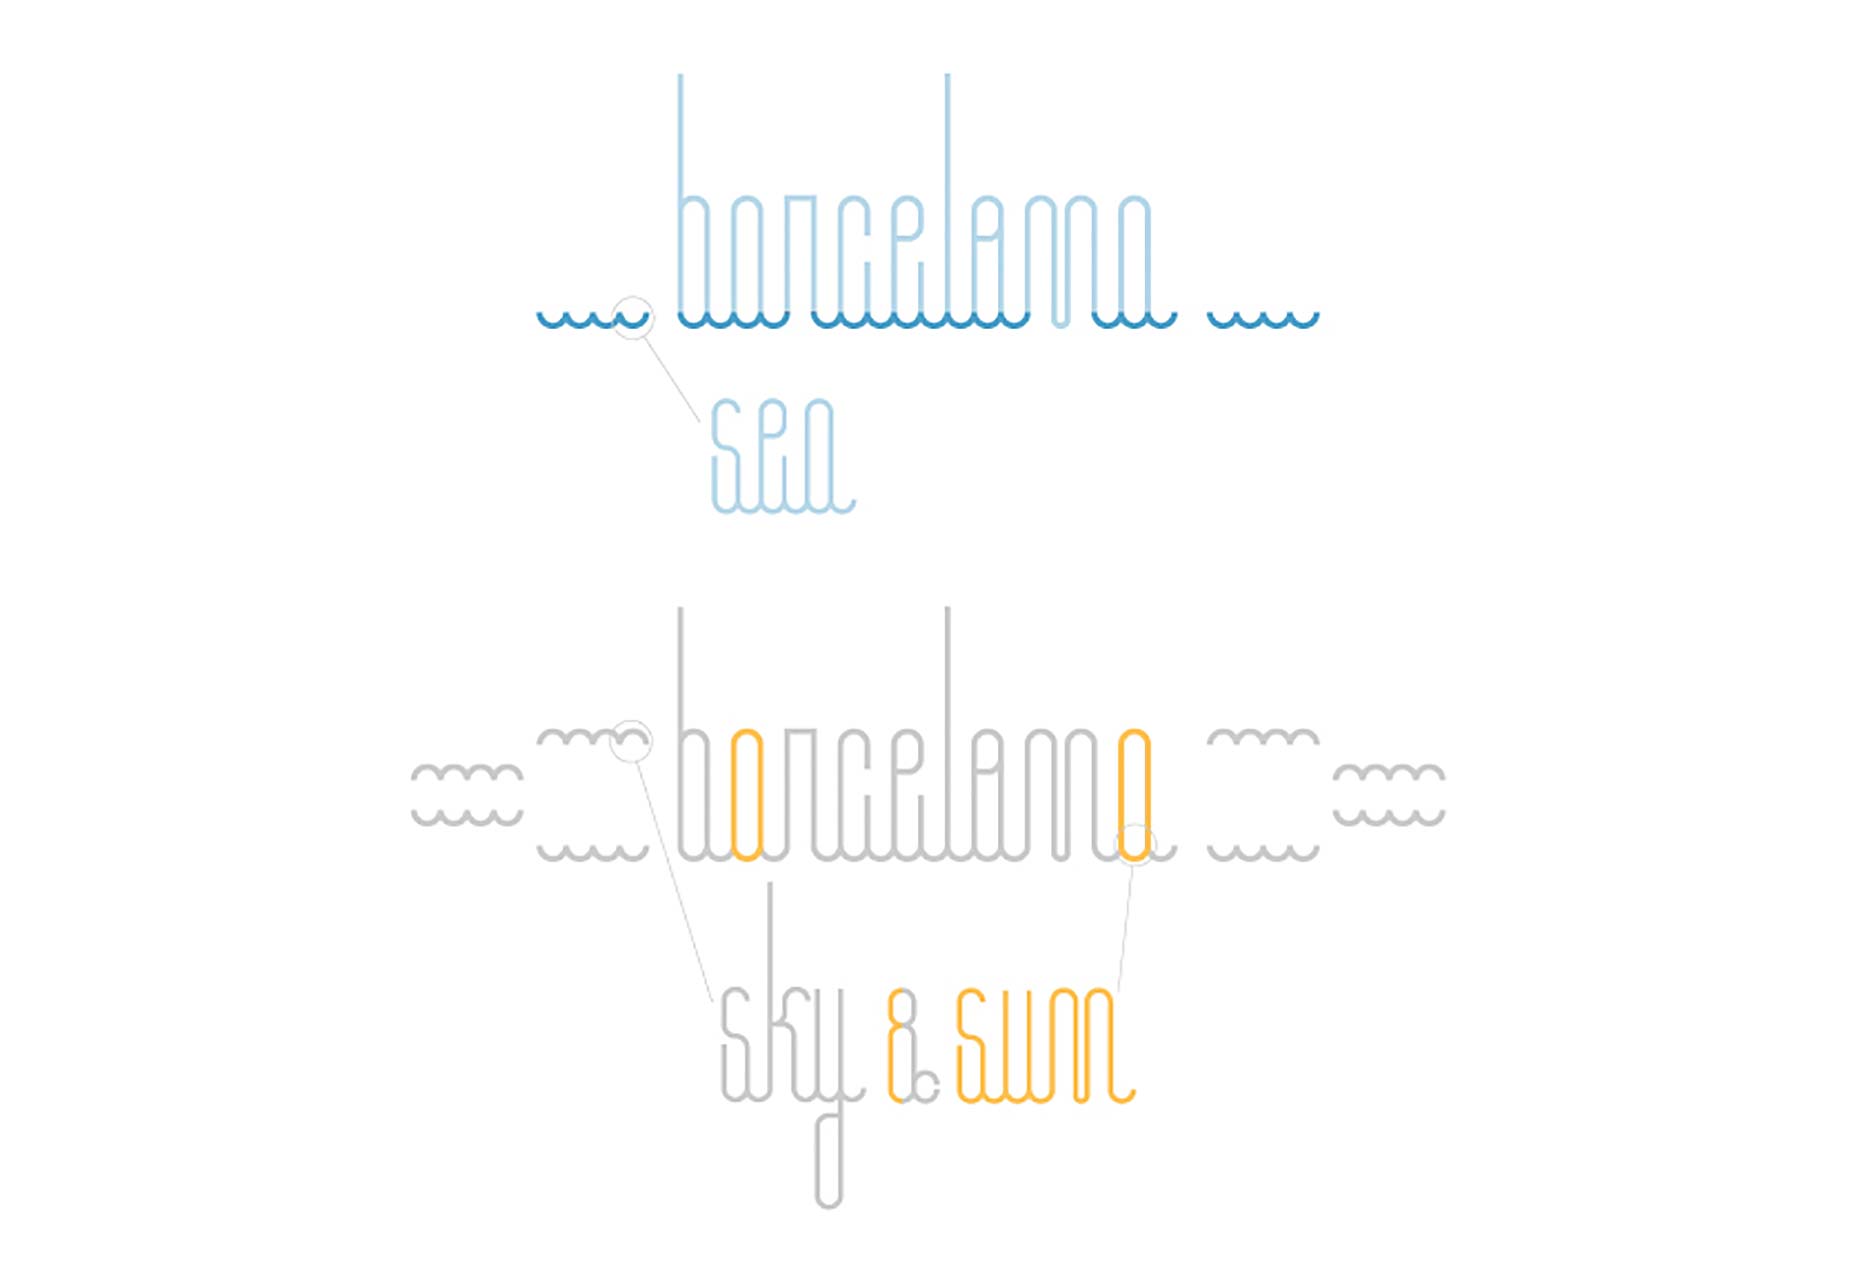 Barcelona free fonts for designers